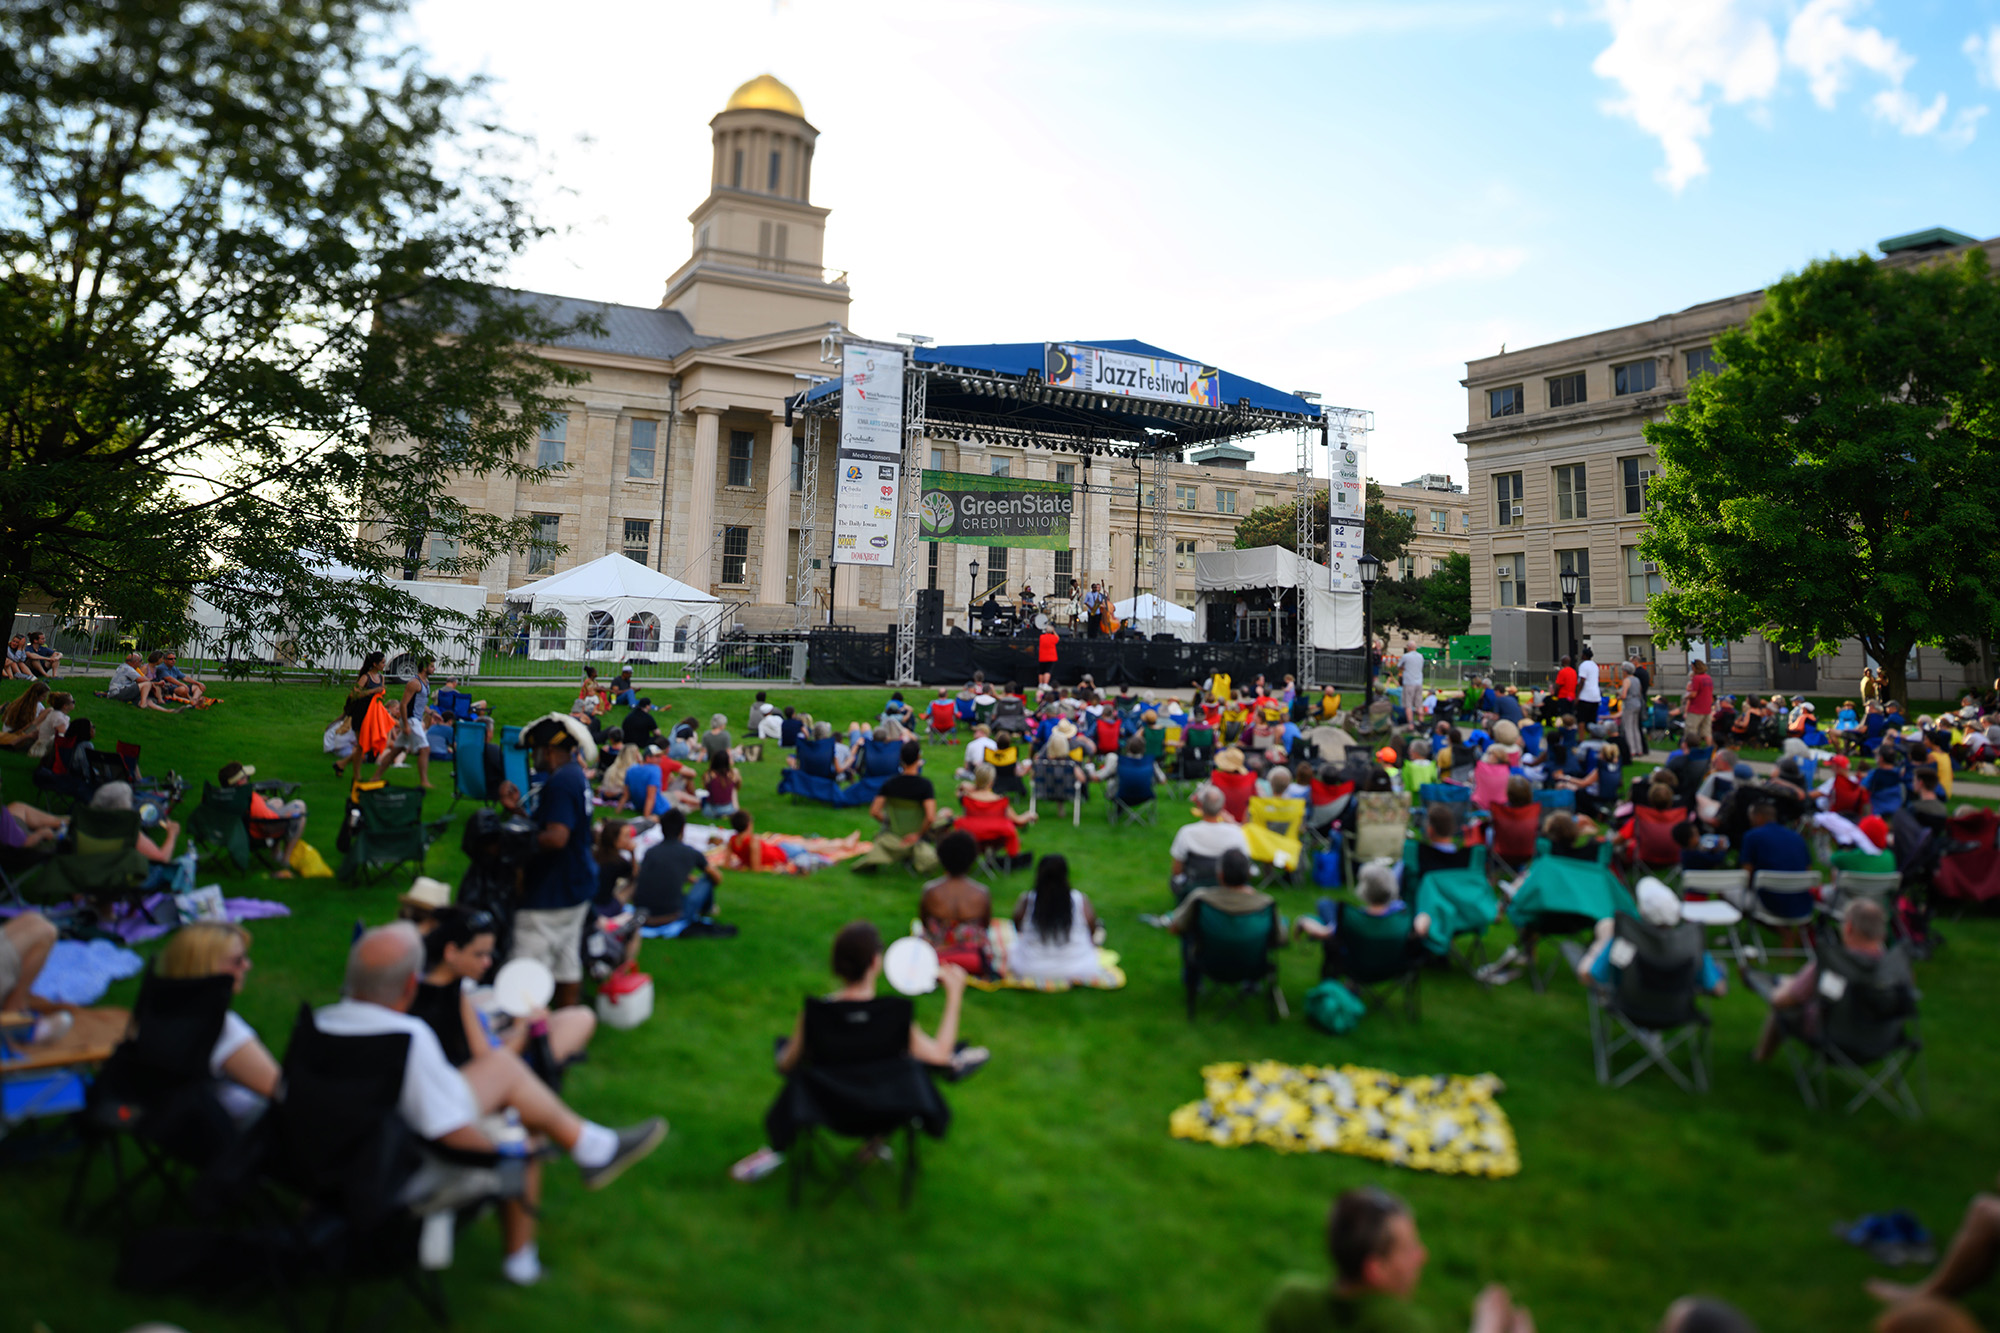 scenes from the 2019 Iowa City Jazz Festival, held on the University of Iowa Pentacrest